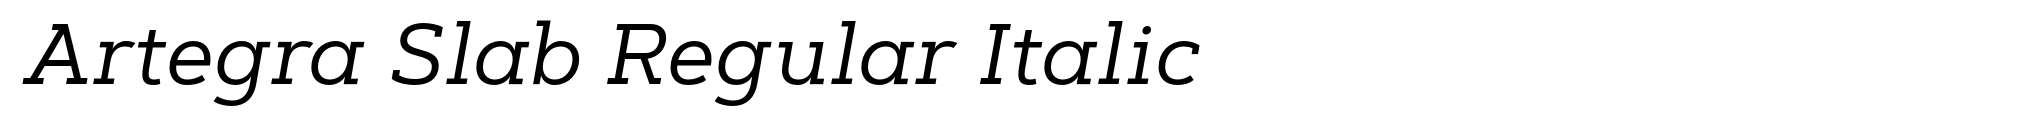 Artegra Slab Regular Italic image